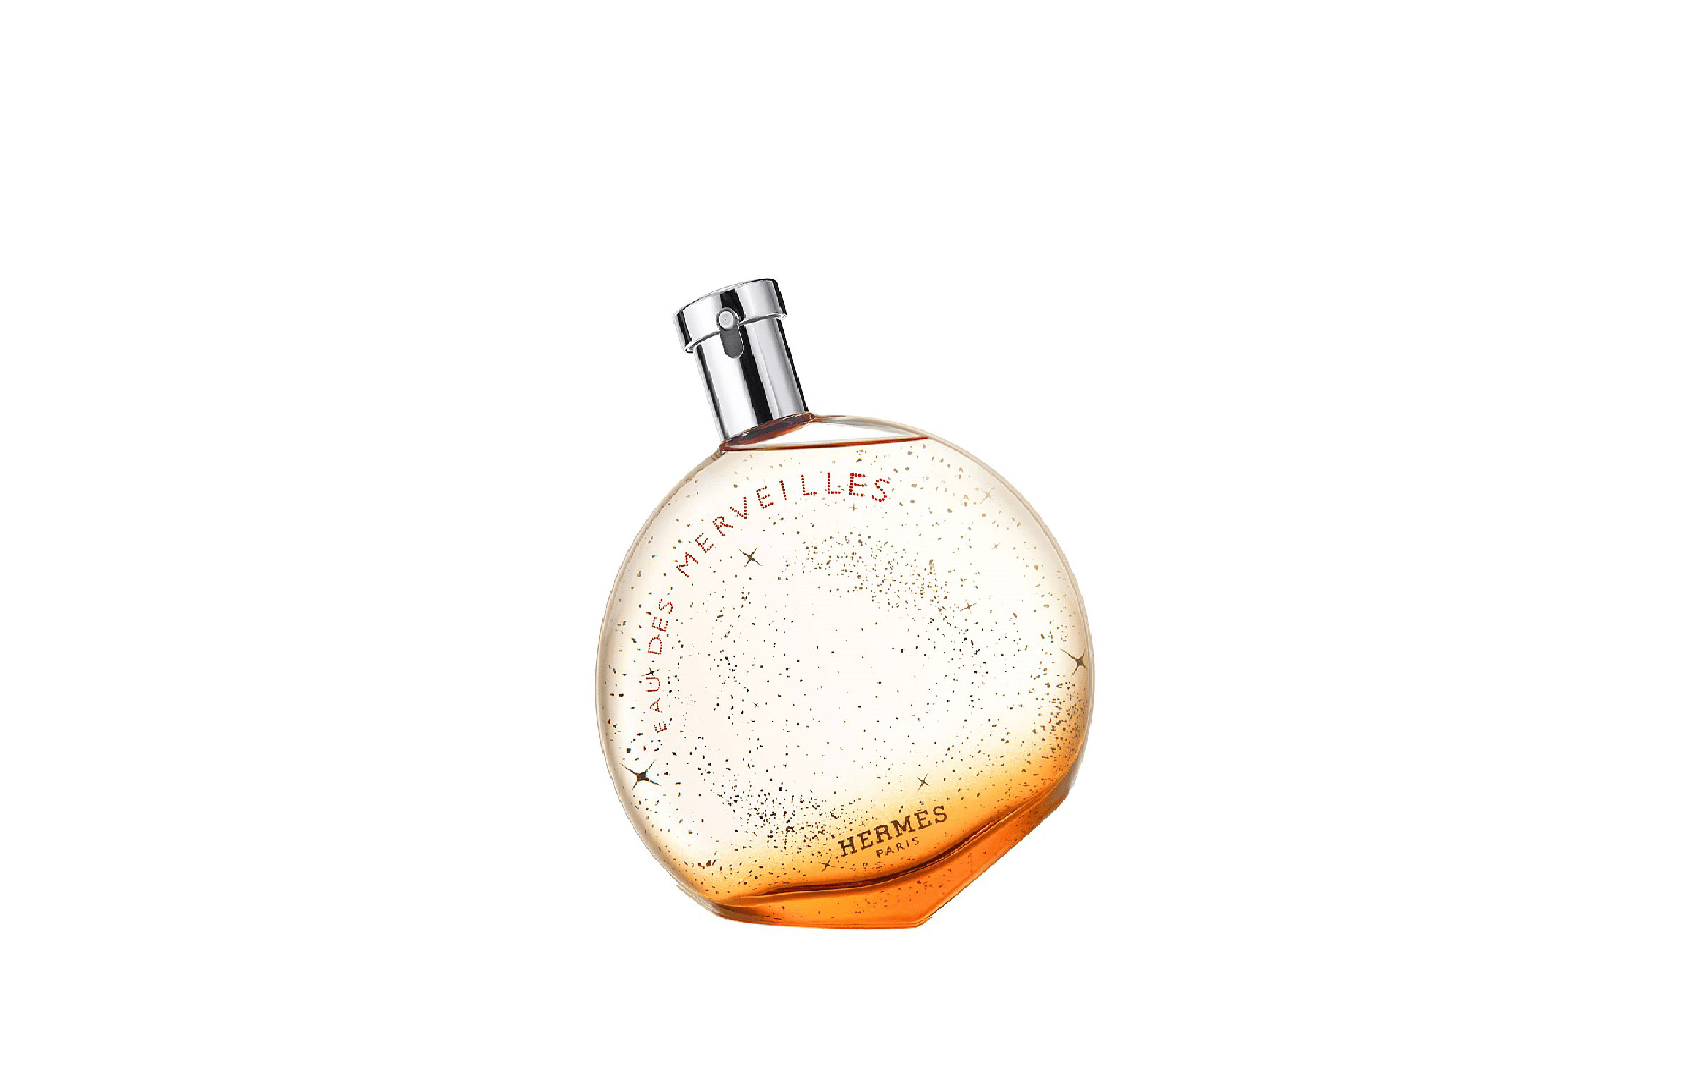 Celes (セレス) | Hermes - Eau de Merveilles / 香水サンプル